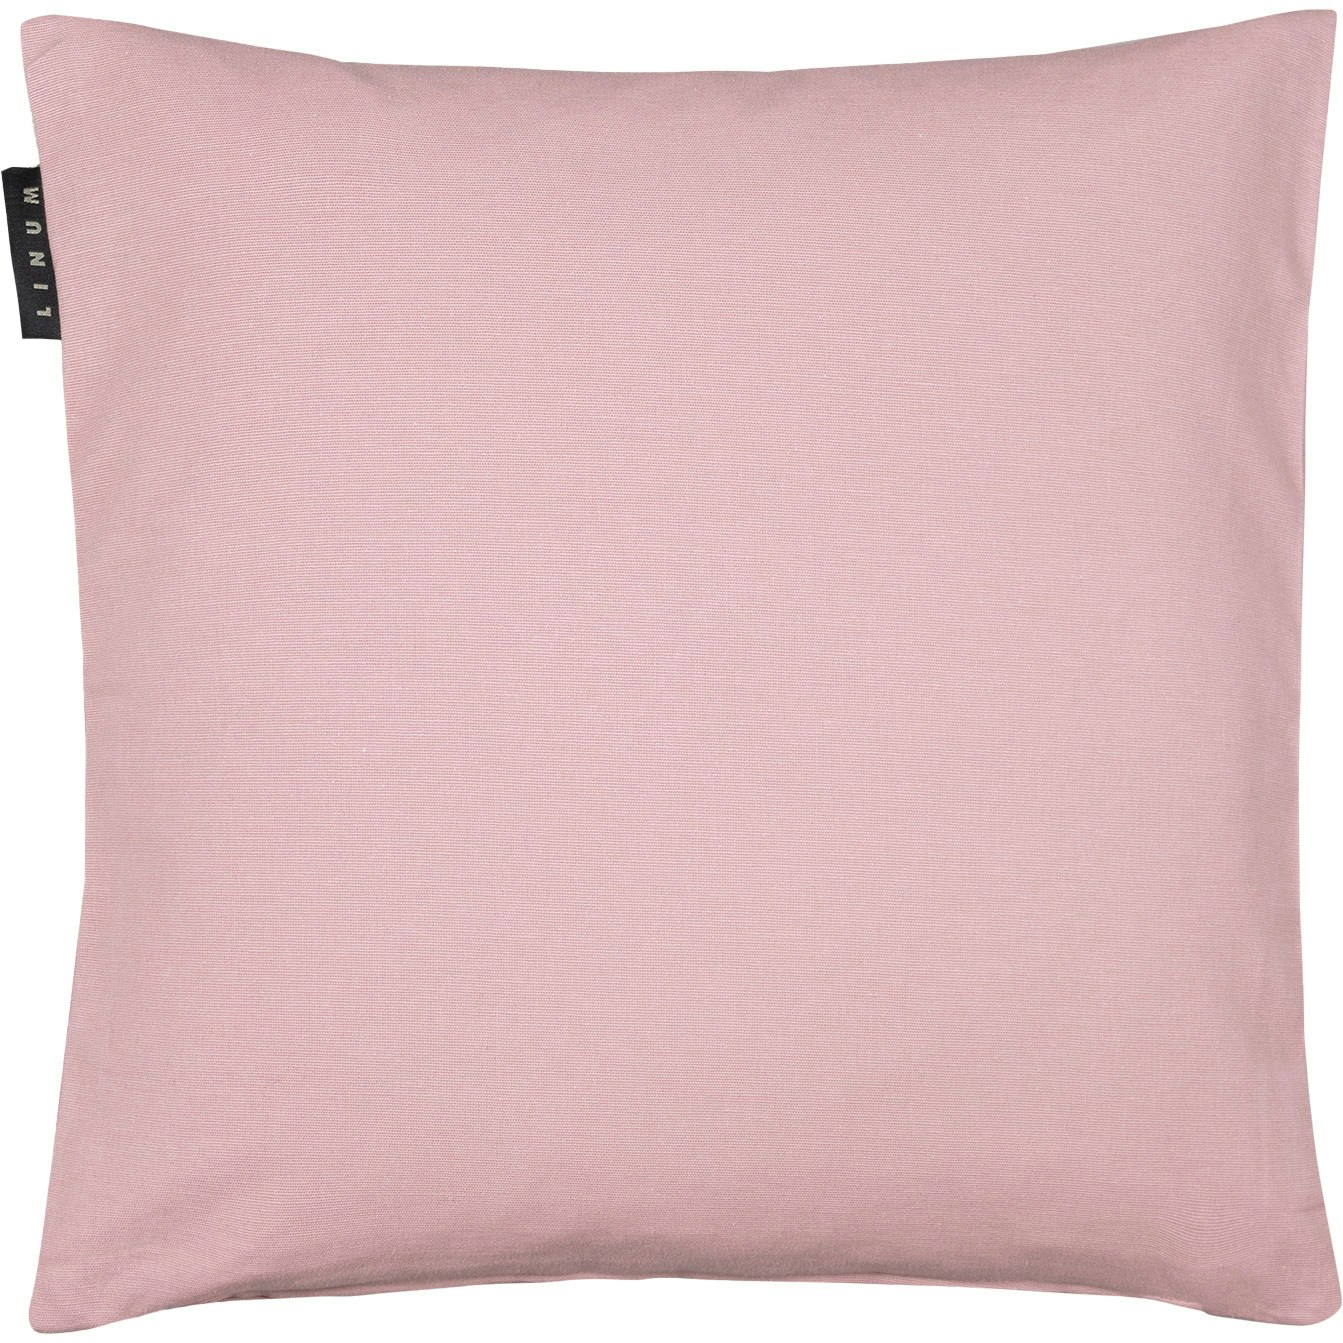 Annabelle Cushion Cover 40x40 cm, Dusty Pink